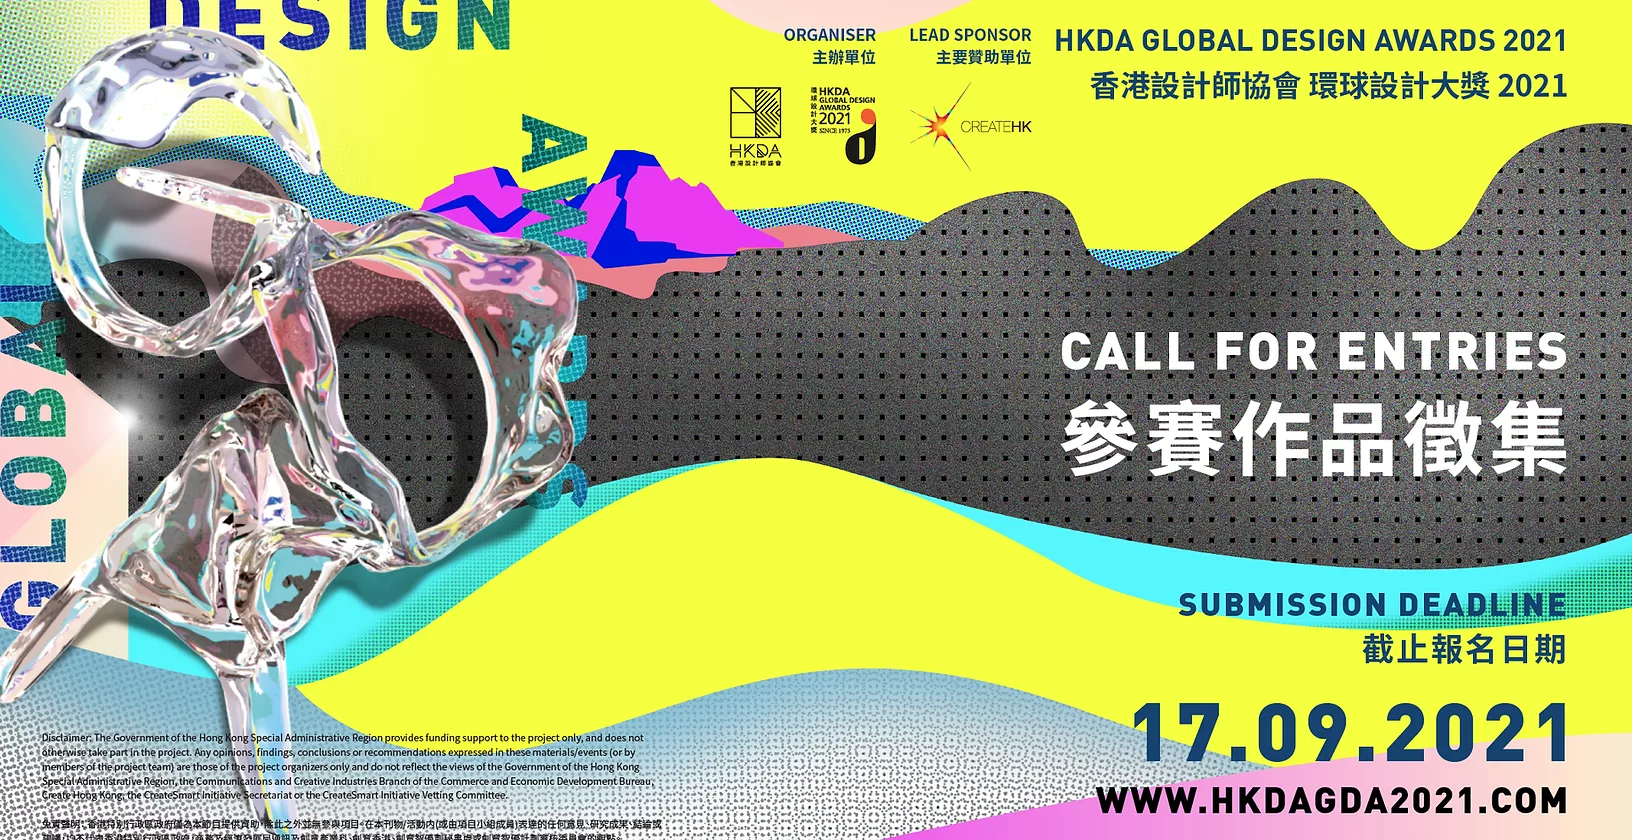 HKDA GDA 2021 Call for Entries